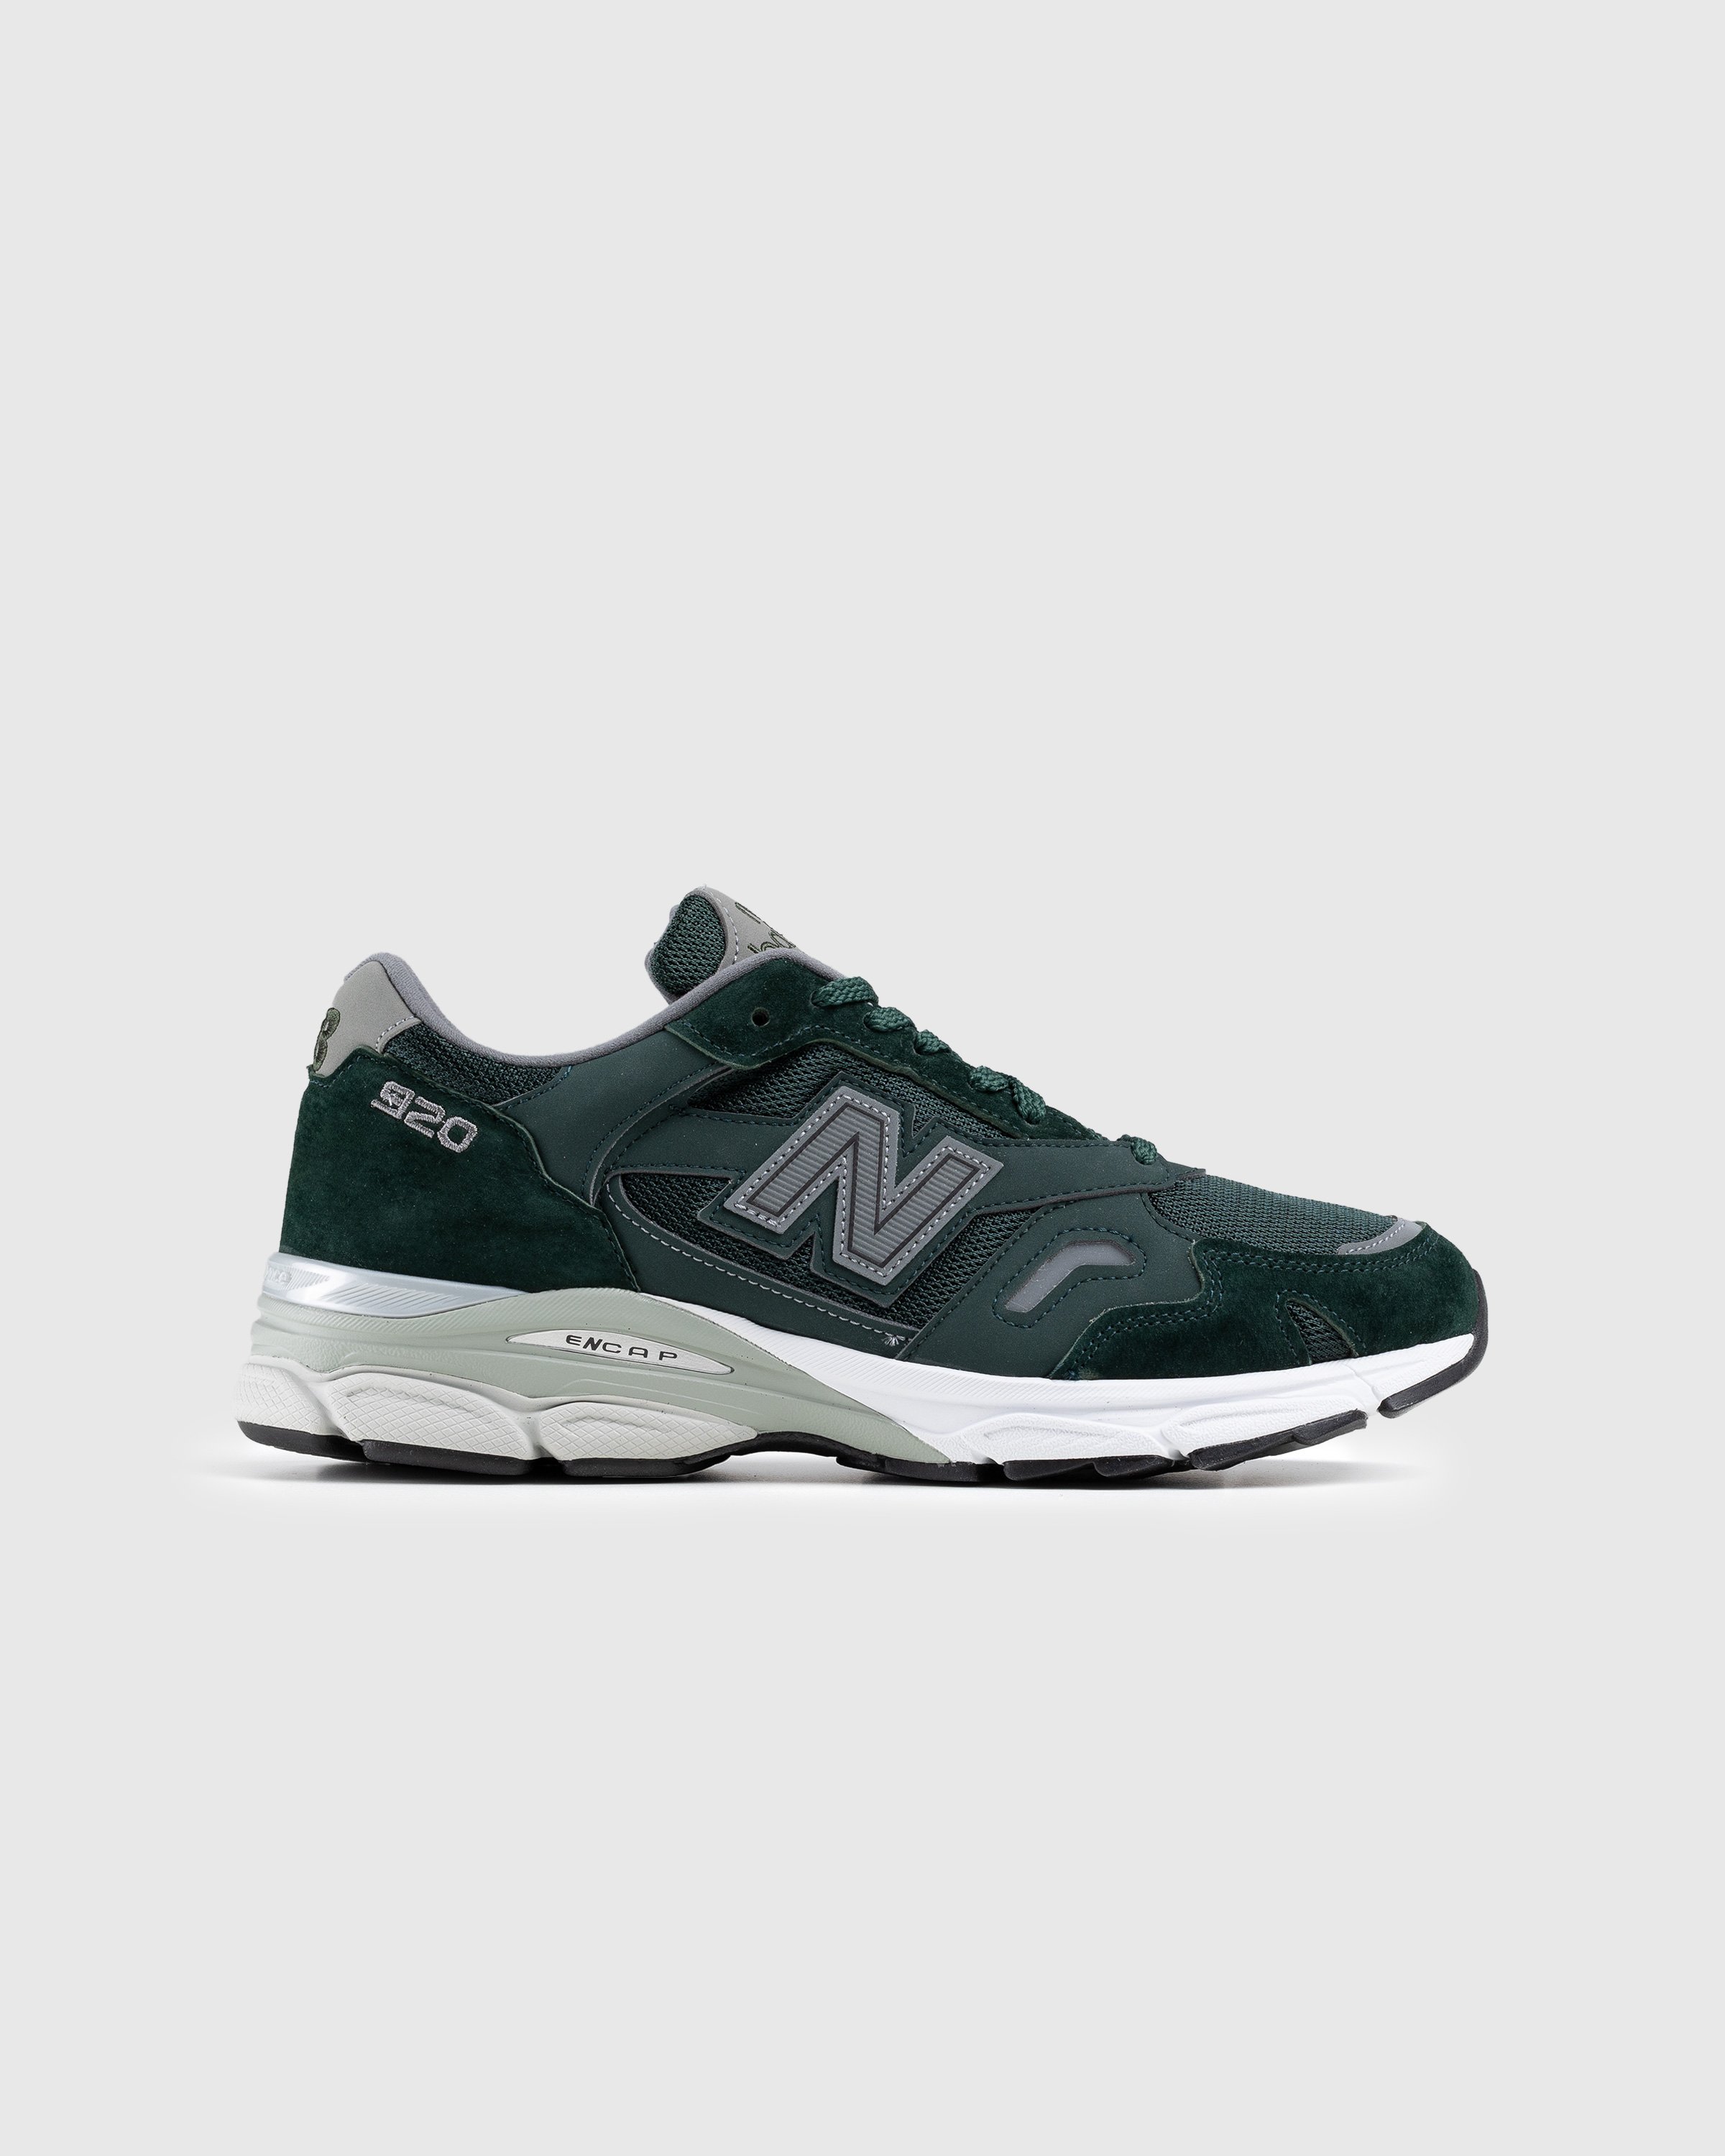 New Balance - M920GRN Green/Grey - Footwear - Green - Image 1